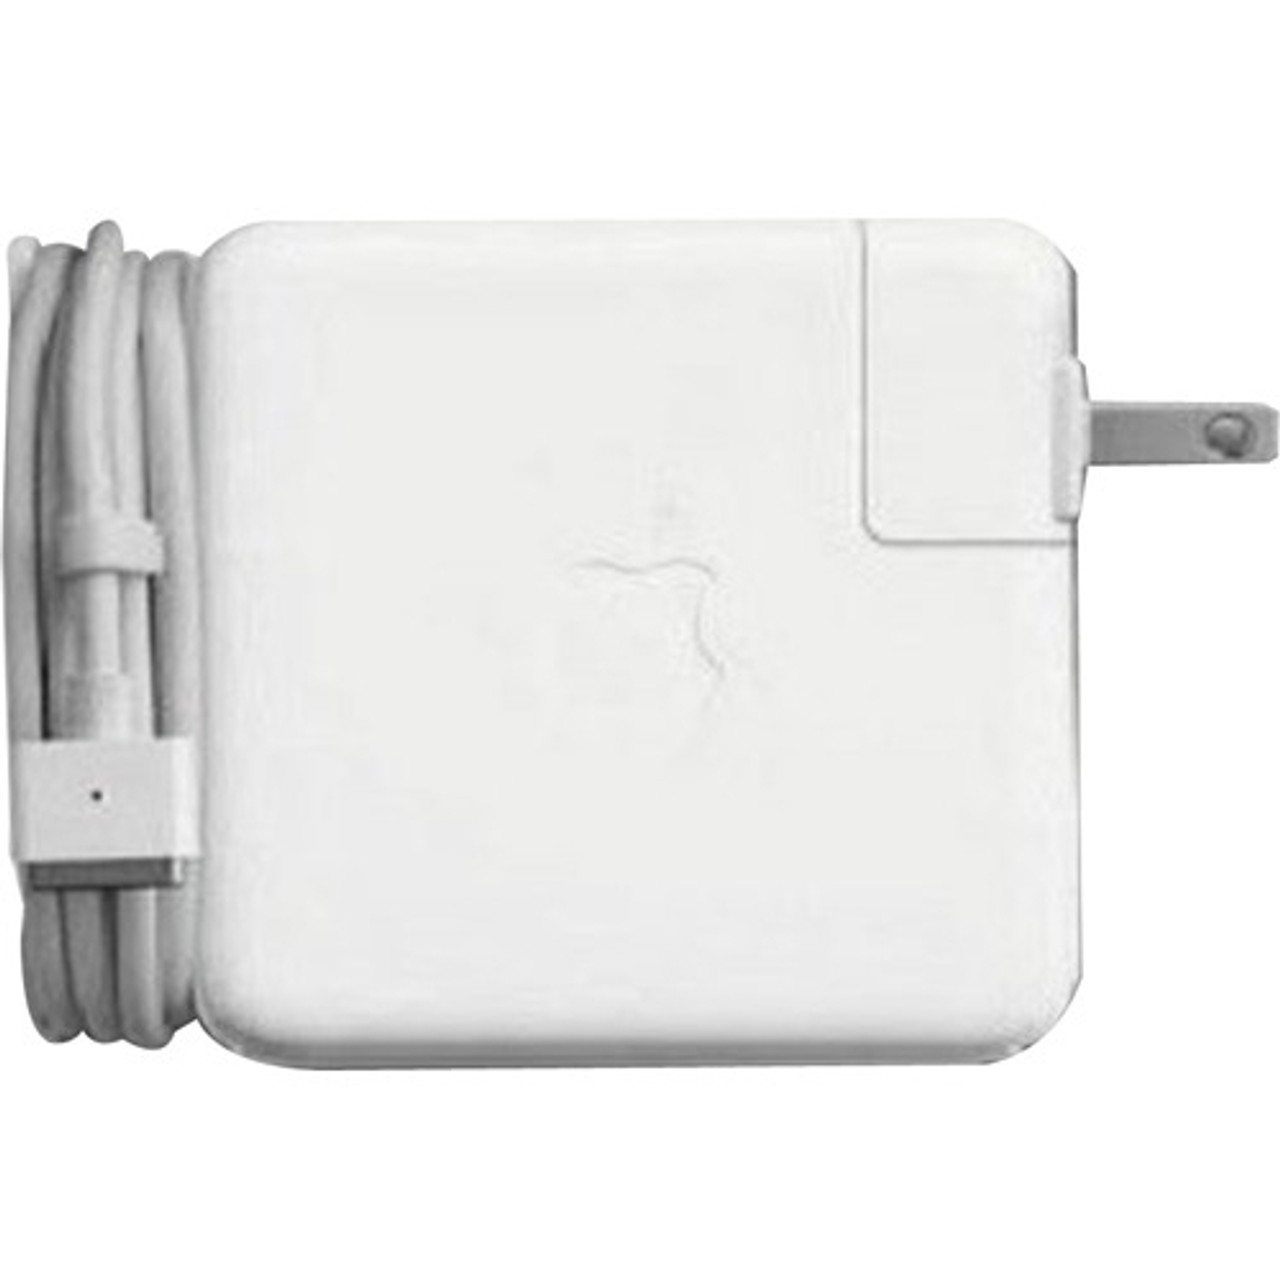 Apple MagSafe 2 AC Adapter 60 W Output 120 V AC 230 AC